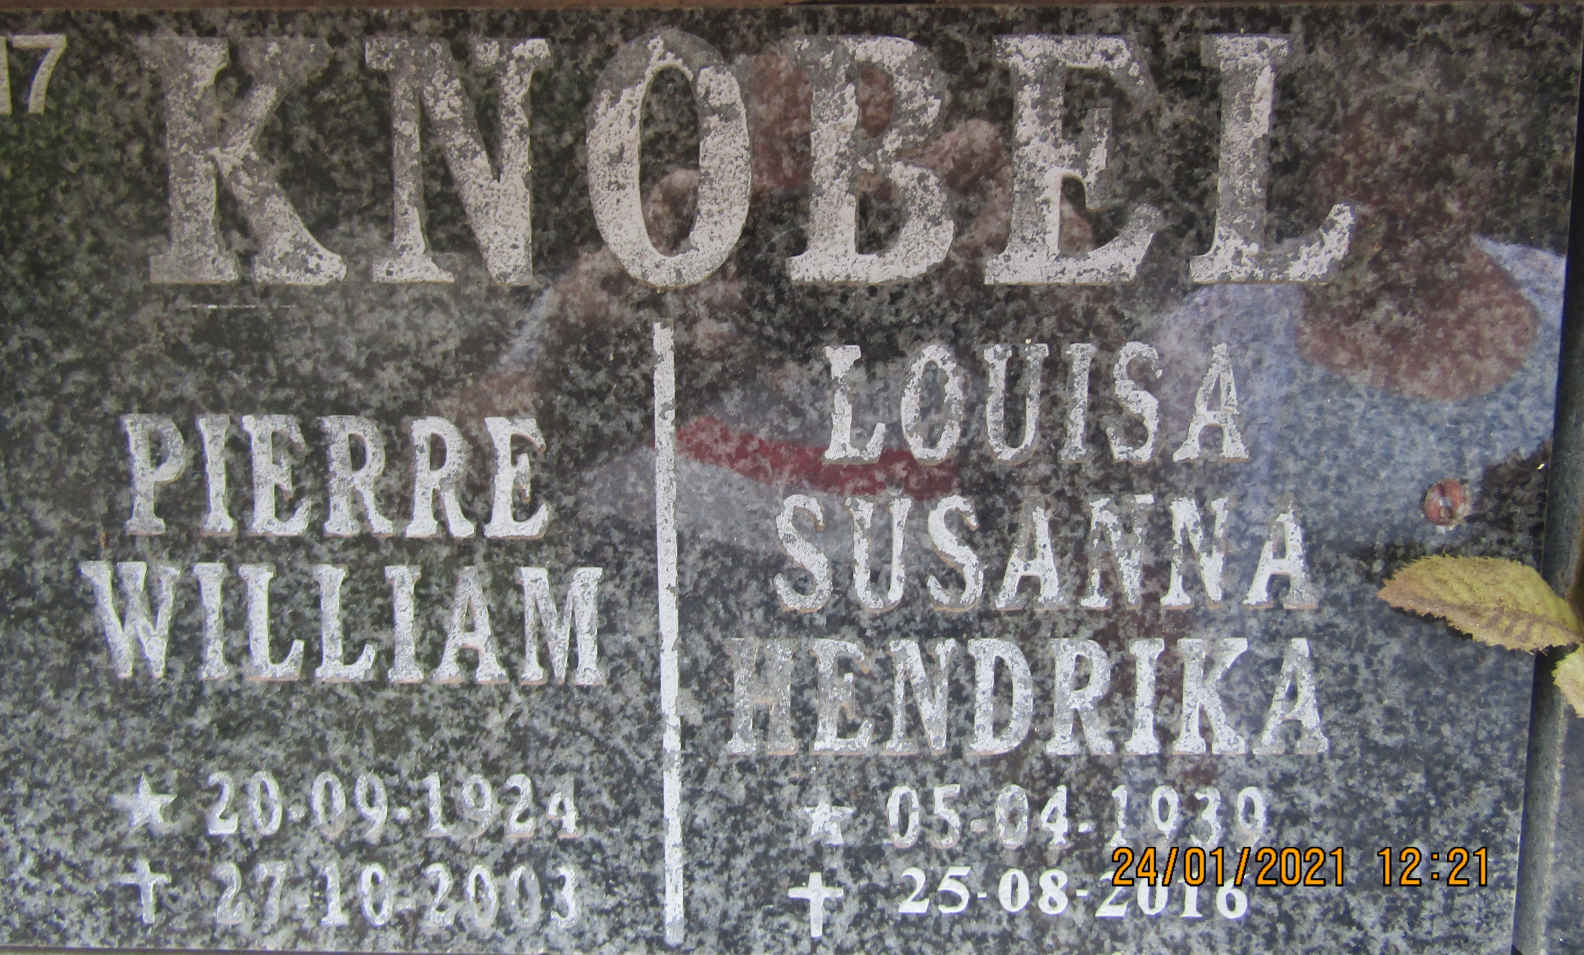 KNOBEL Pierre William 1924-2003 & Louisa Susanna Hendrika 1939-2016